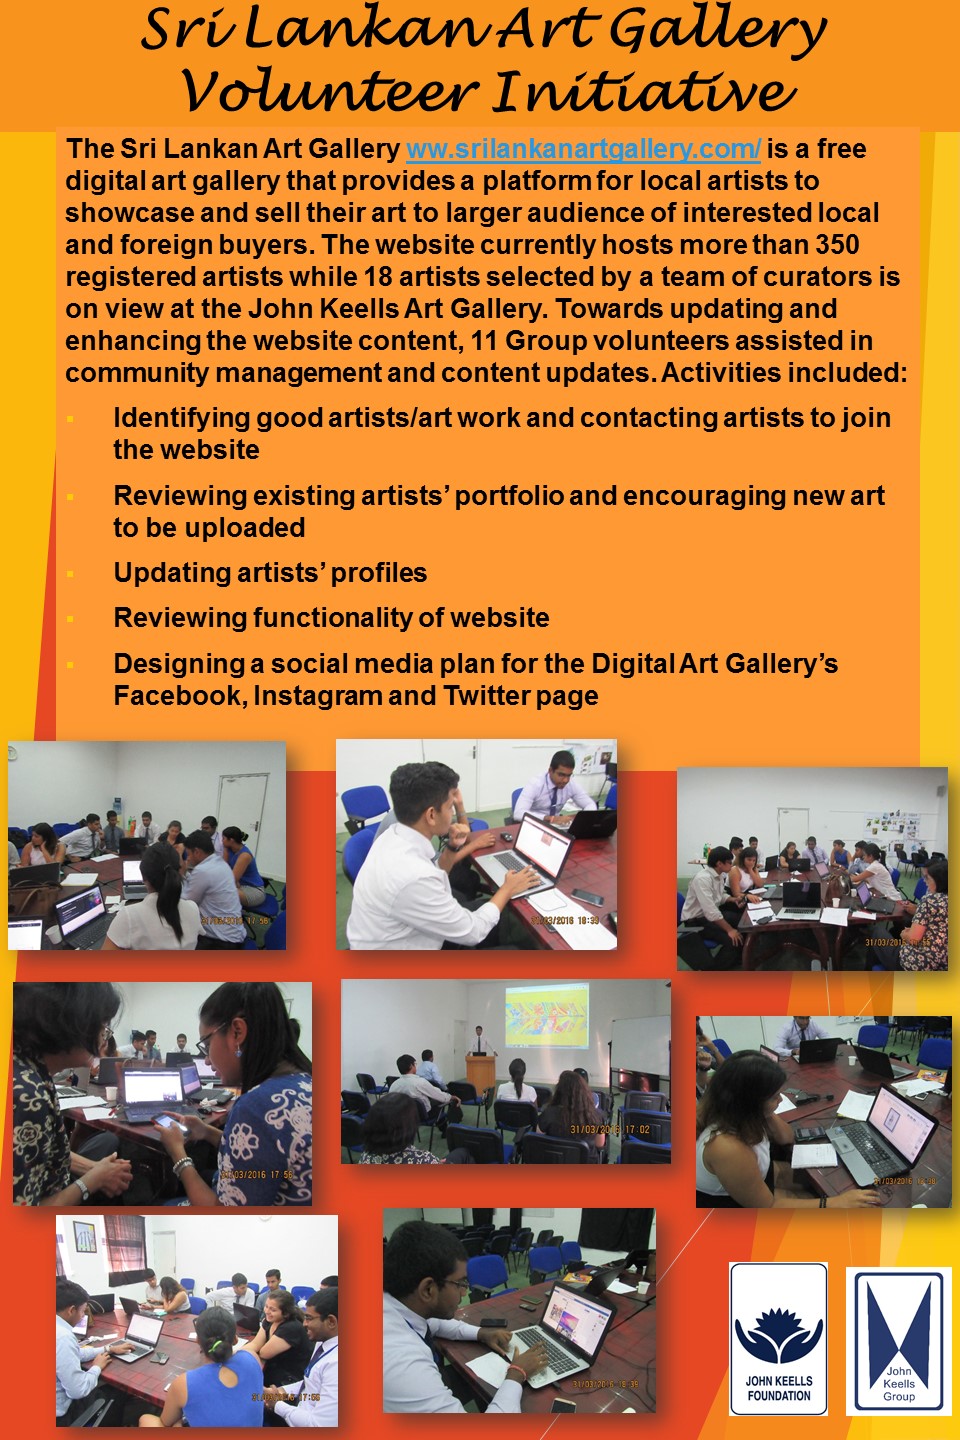 Sri Lankan Art Gallery Volunteer Initiative (March 2016)